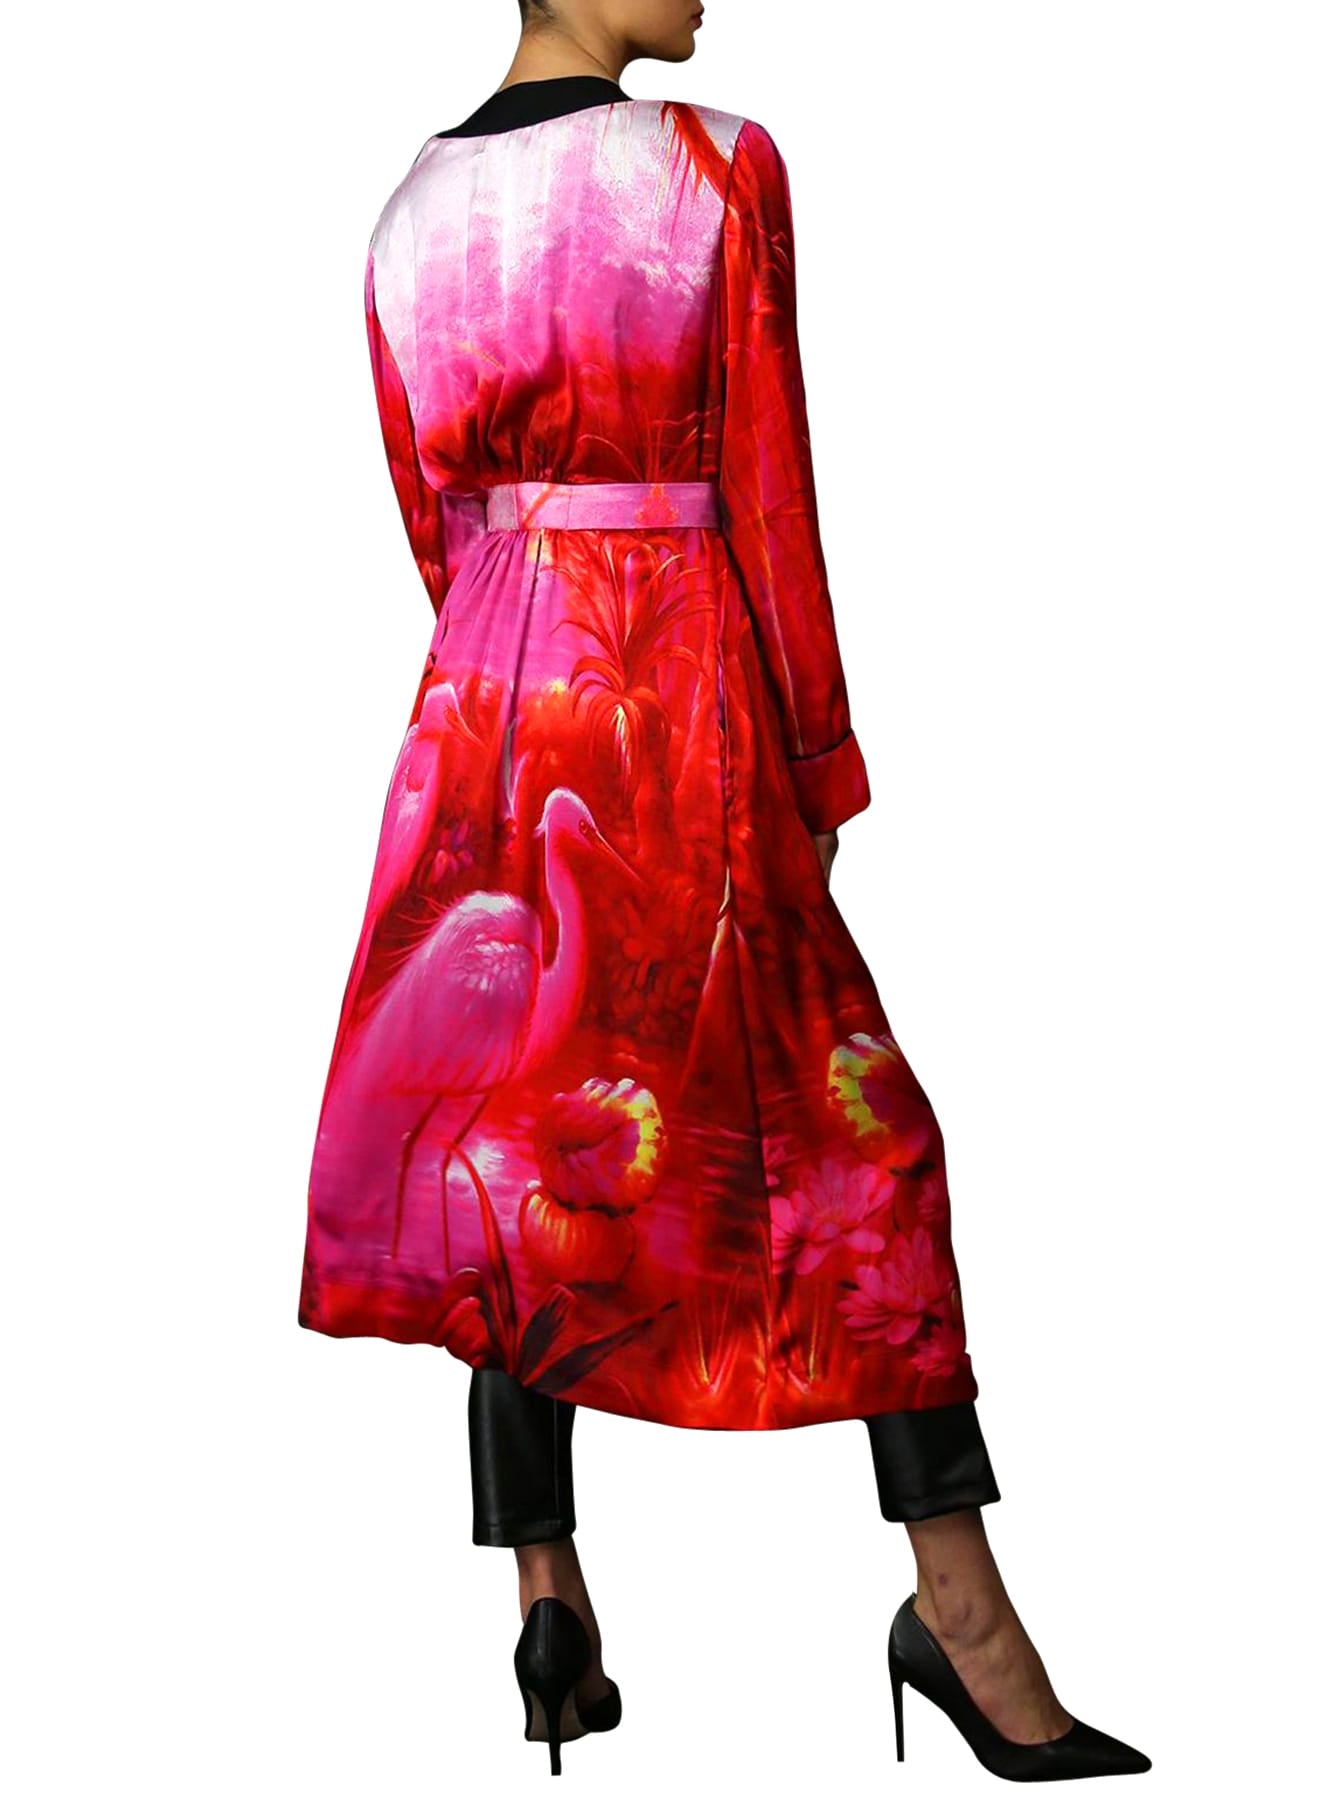 "pink silk robe" "Kyle X Shahida" "cute kimonos" "woman in silk robe" "designer kimono"